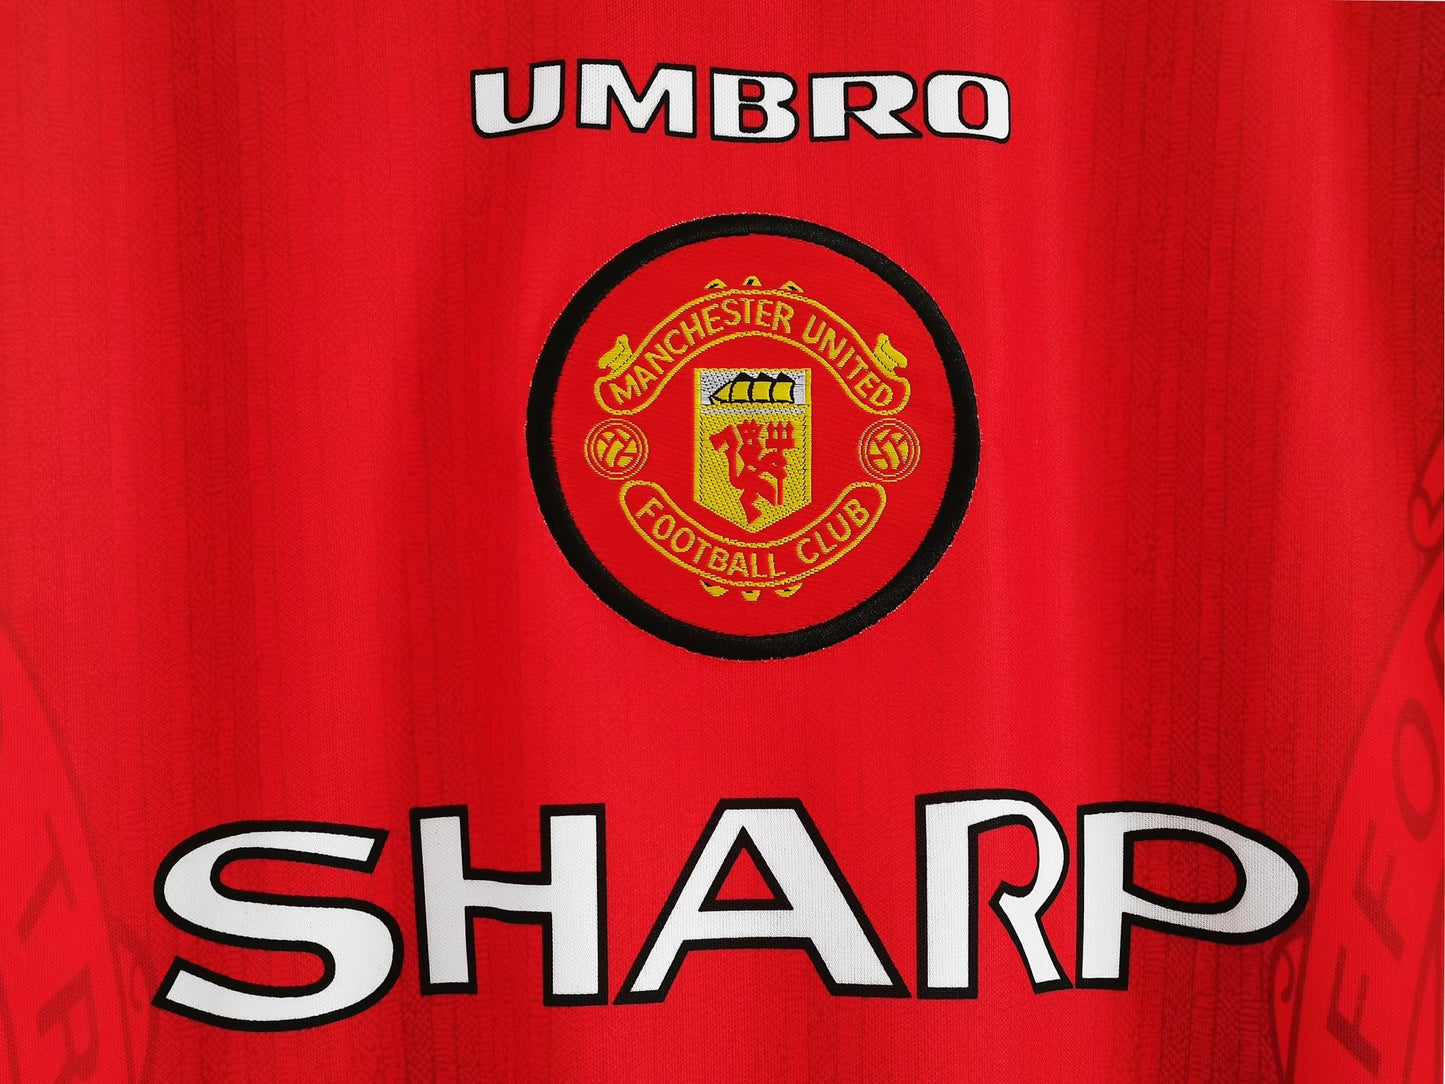 1996/97 Manchester United Long Sleeve Home Retro Kit